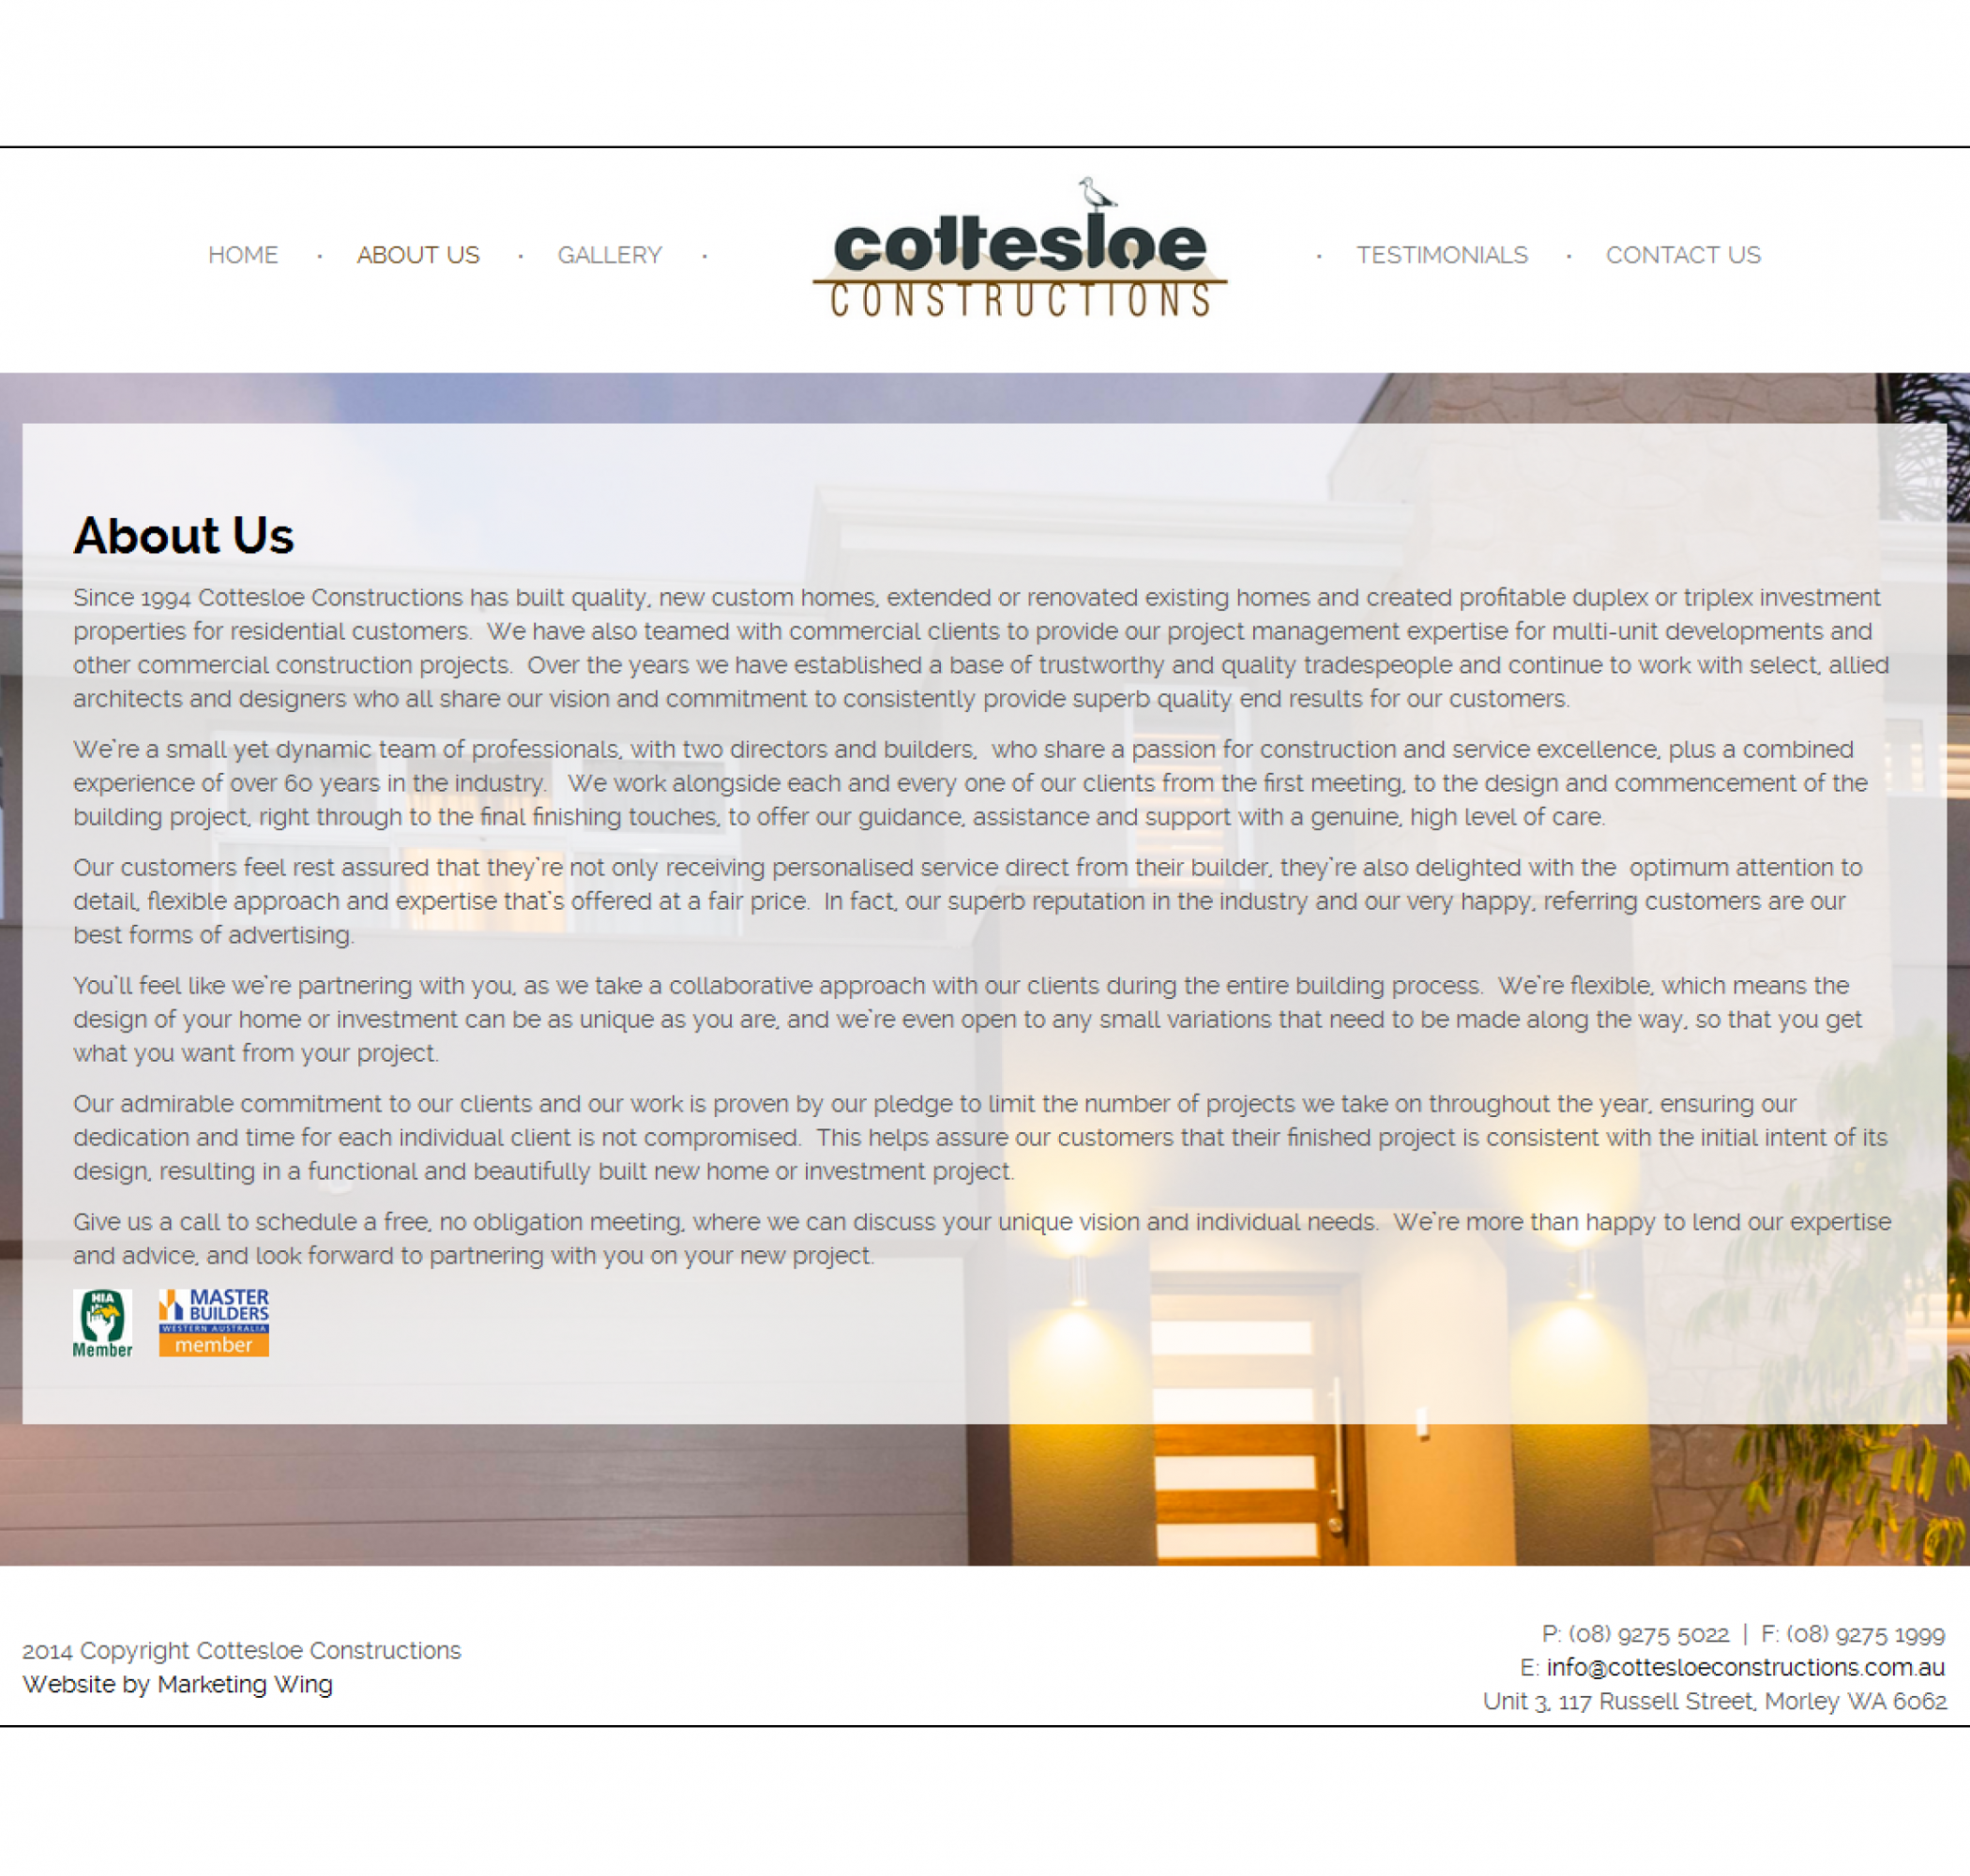 Marketing Wing website development for Cottesloe Constructions